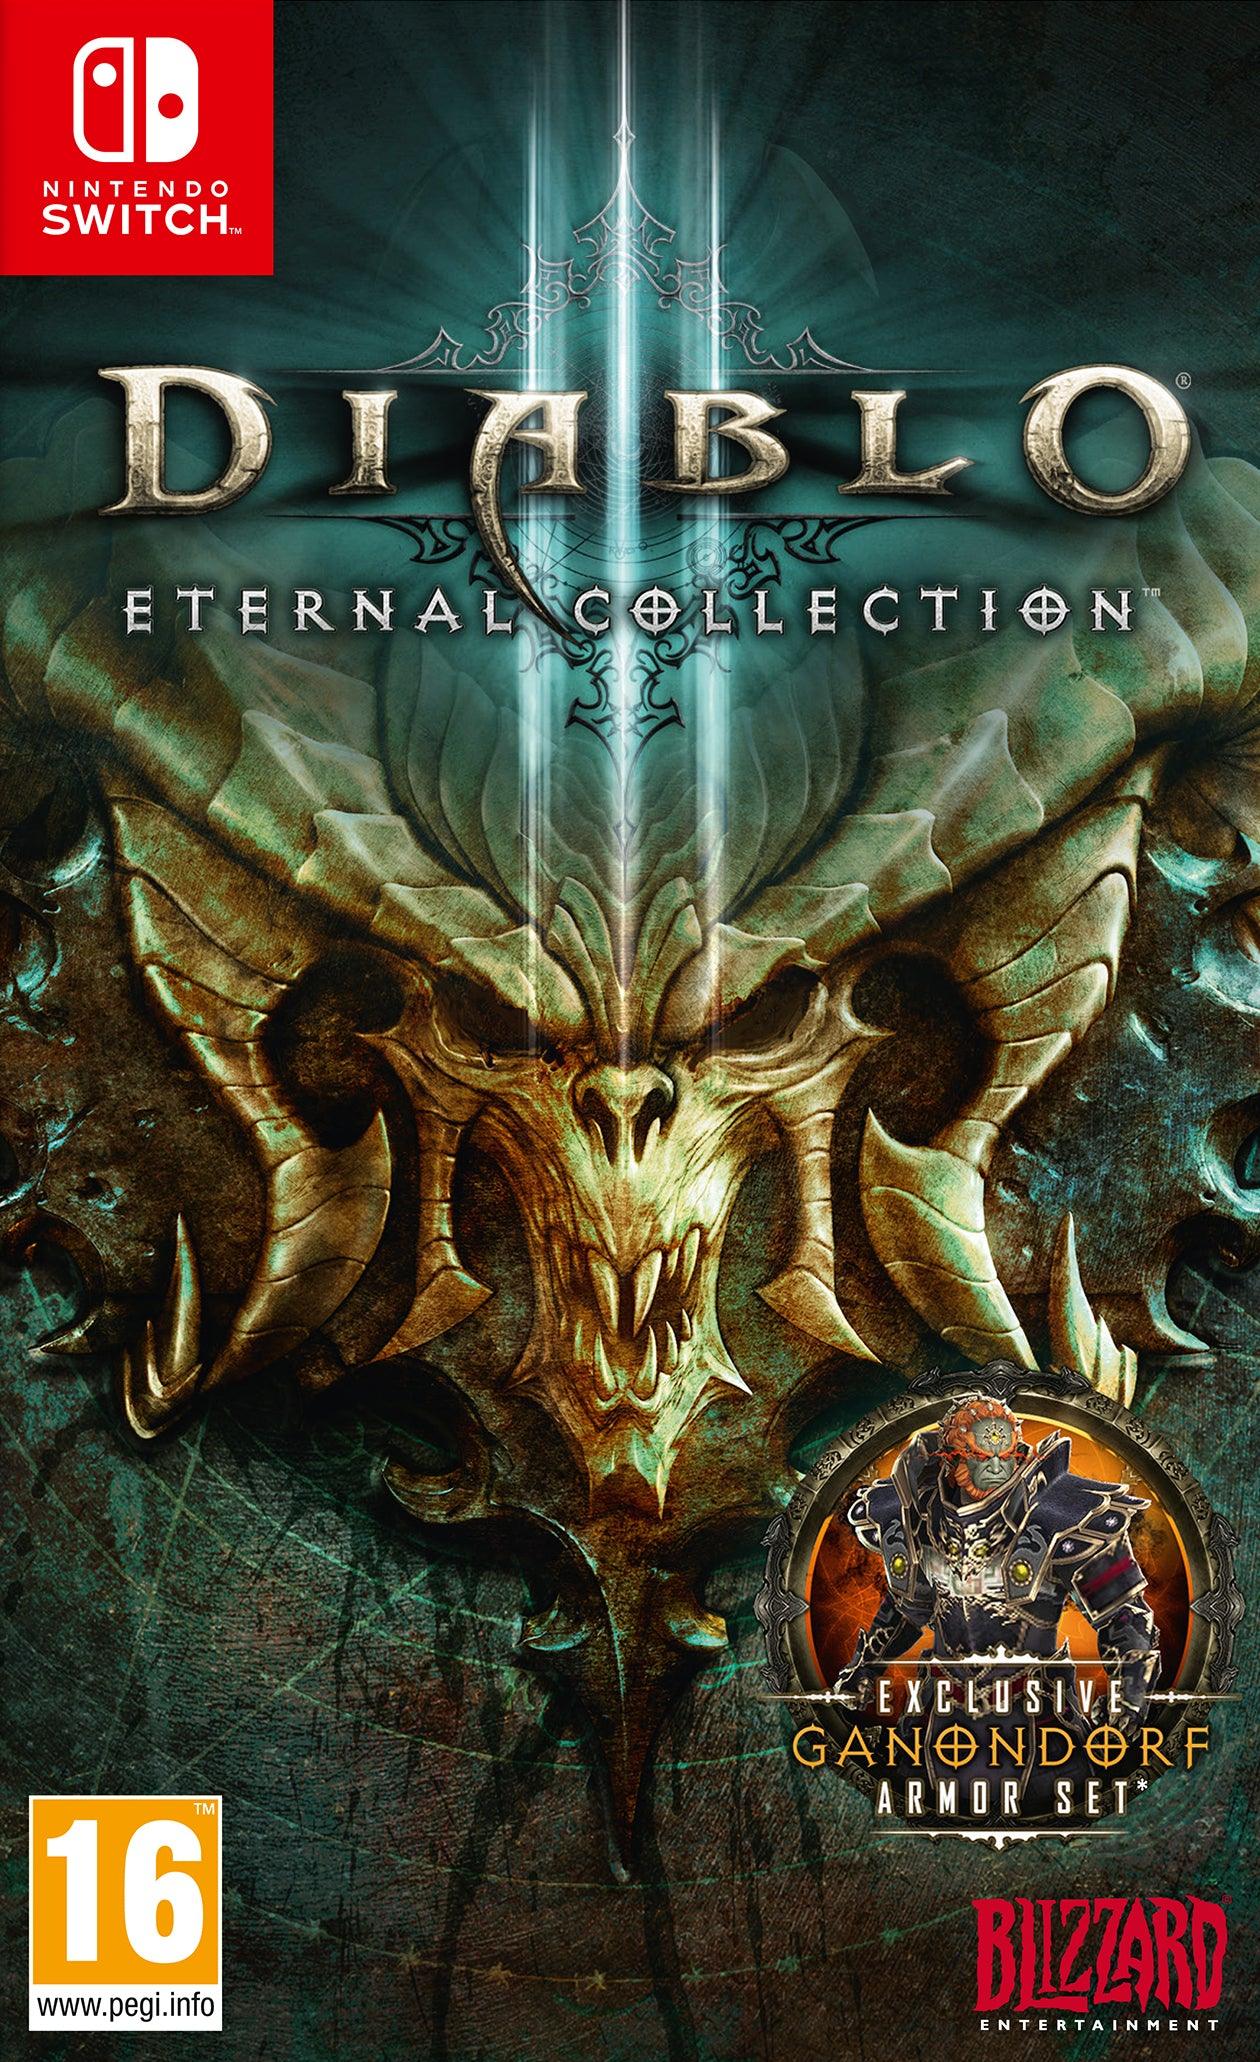 Diablo Eternal Collection - Want a New Gadget